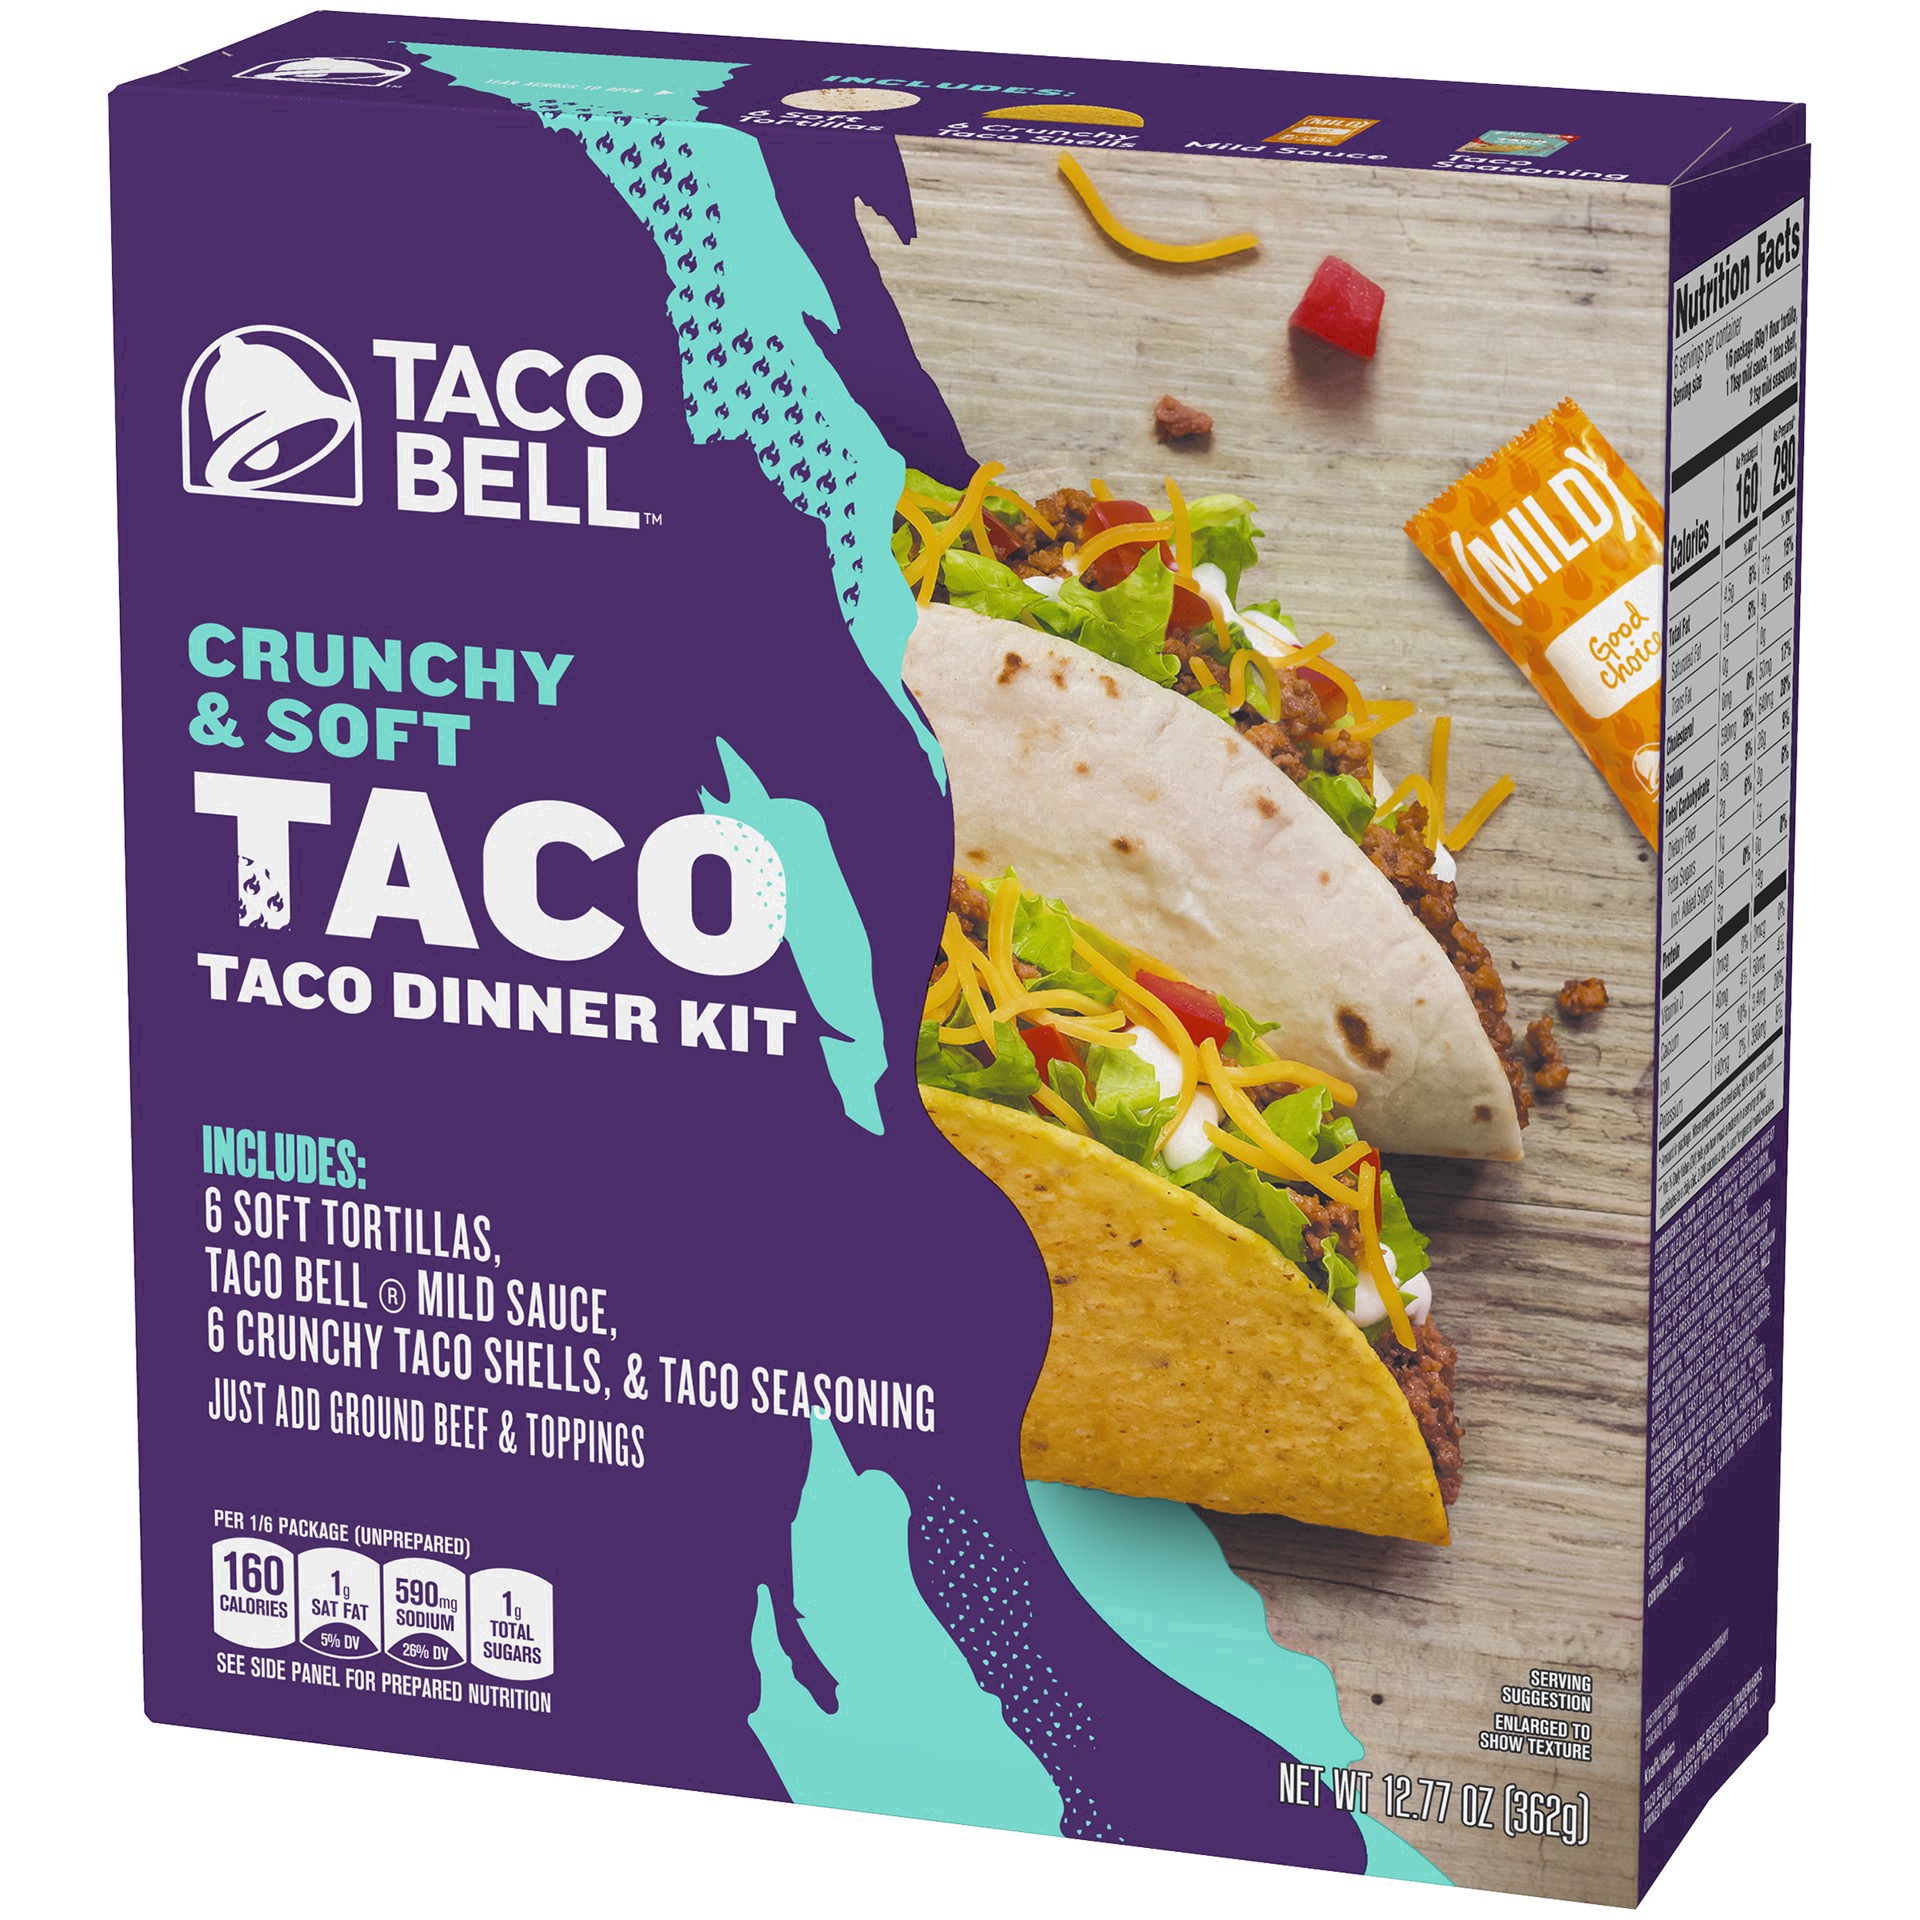 slide 7 of 101, Taco Bell Crunchy & Soft Taco Cravings Kit with 6 Soft Tortillas, 6 Crunchy Taco Shells, Taco Bell Mild Sauce & Seasoning, 12.77 oz Box, 1 ea